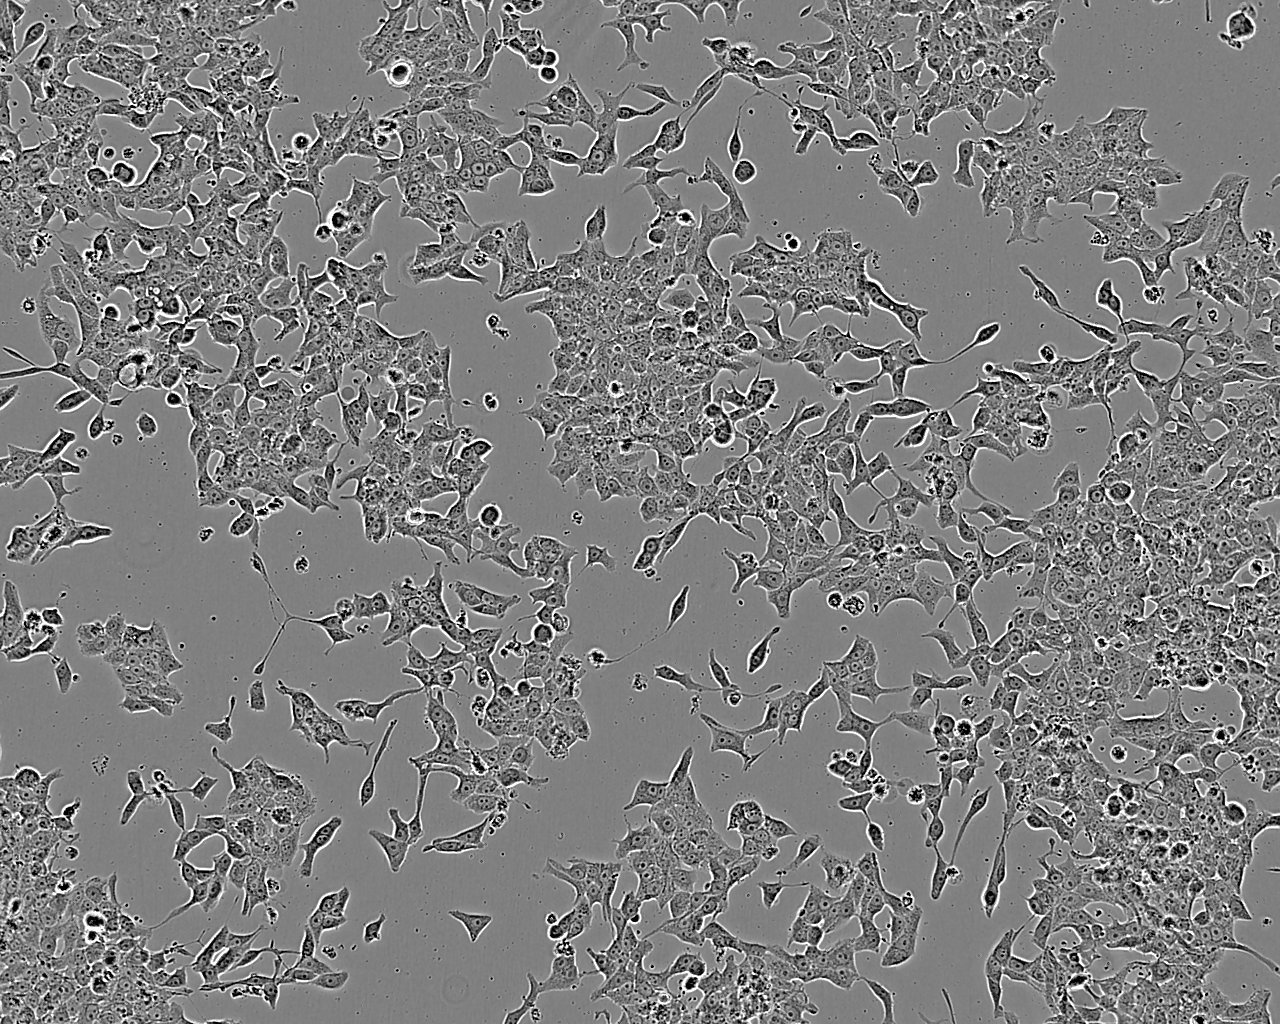 3T3-Swiss albino 小鼠胚胎成纤维细胞系,3T3-Swiss albino